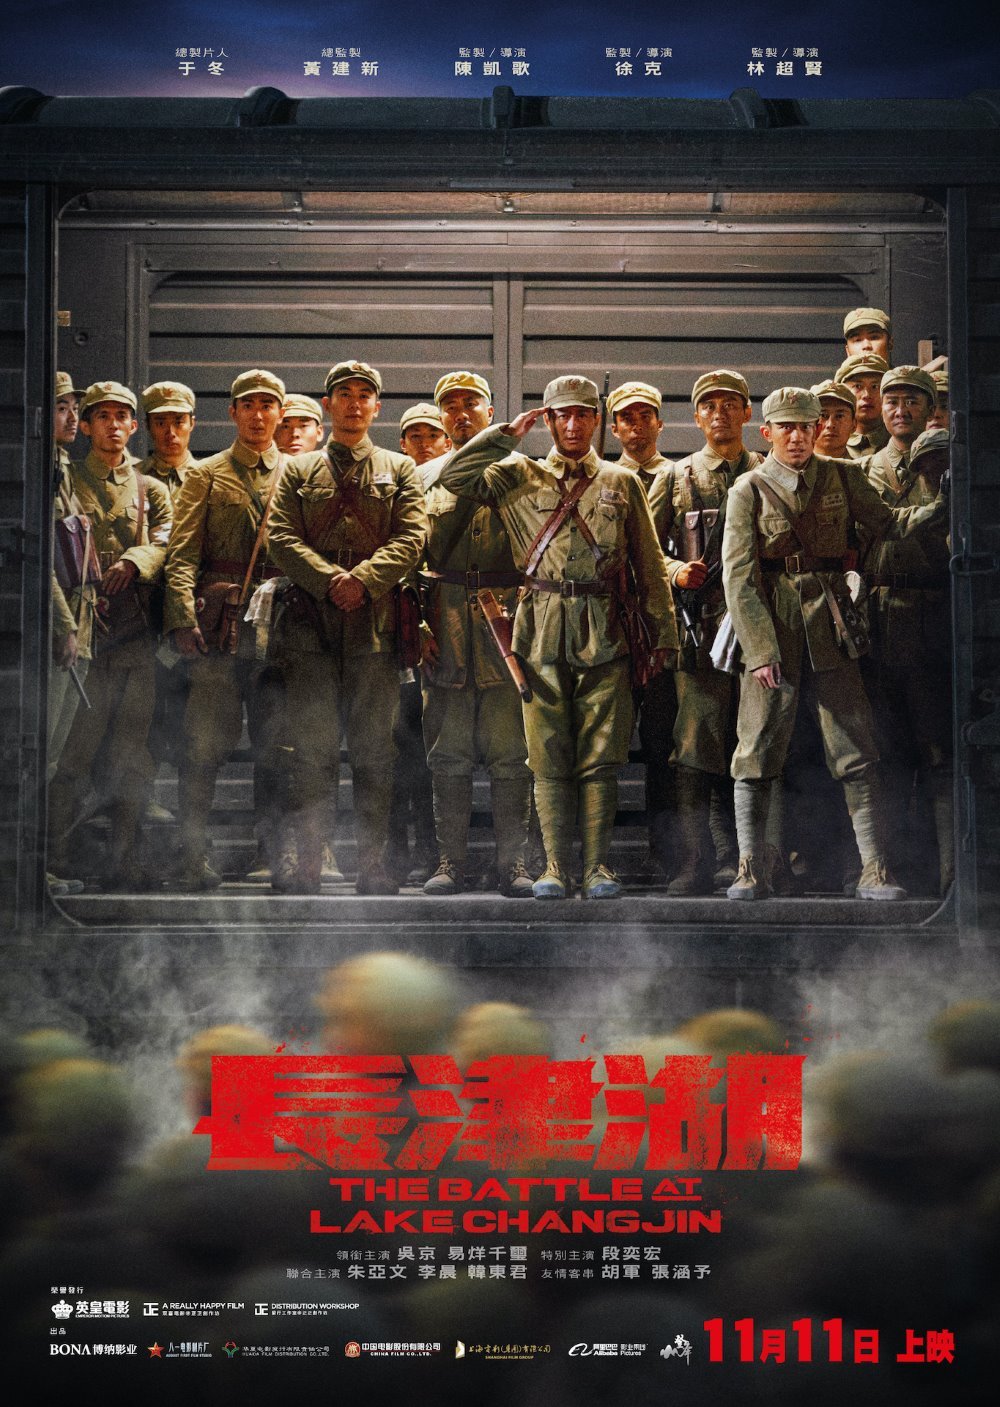 長津湖電影圖片 - changjin_soldier_poster_2_1636365757.jpg